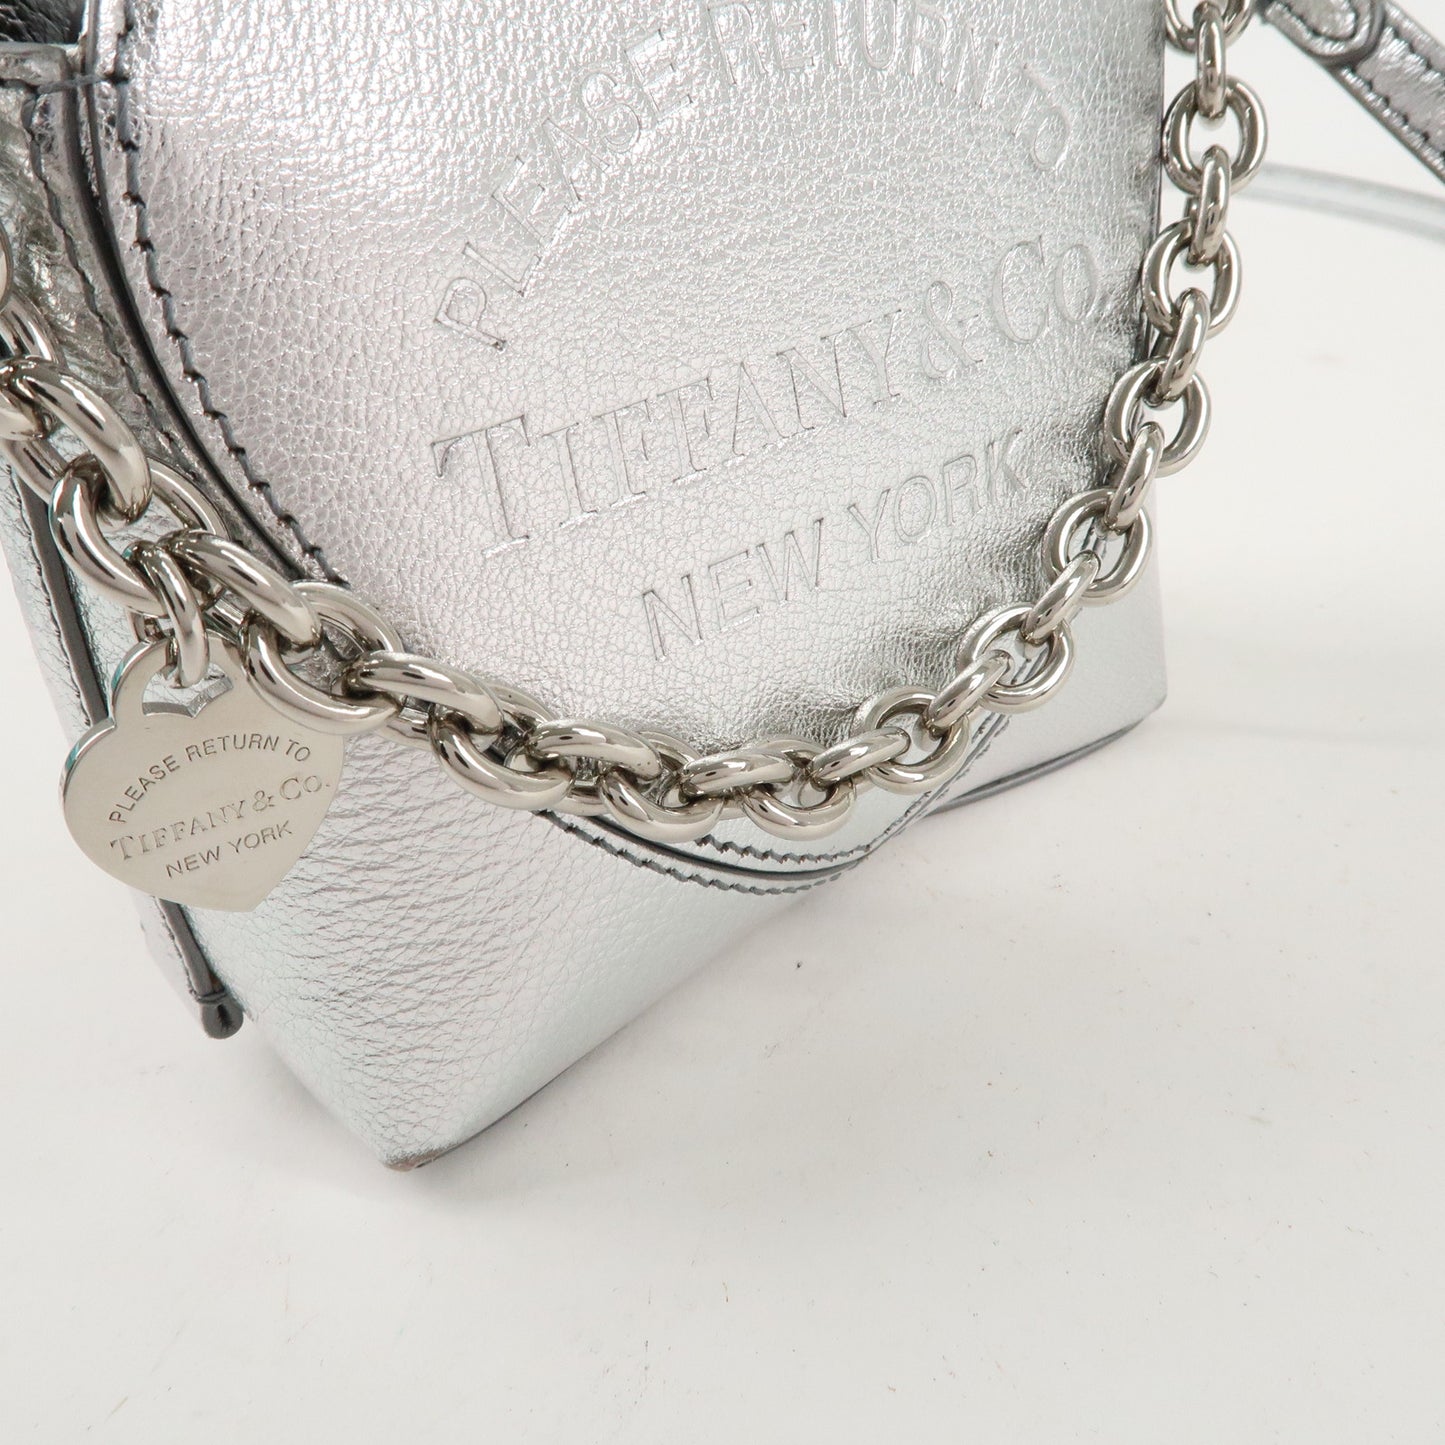 Tiffany & Co. Leather Return to Tiffany Micro Tote Bag SIlver